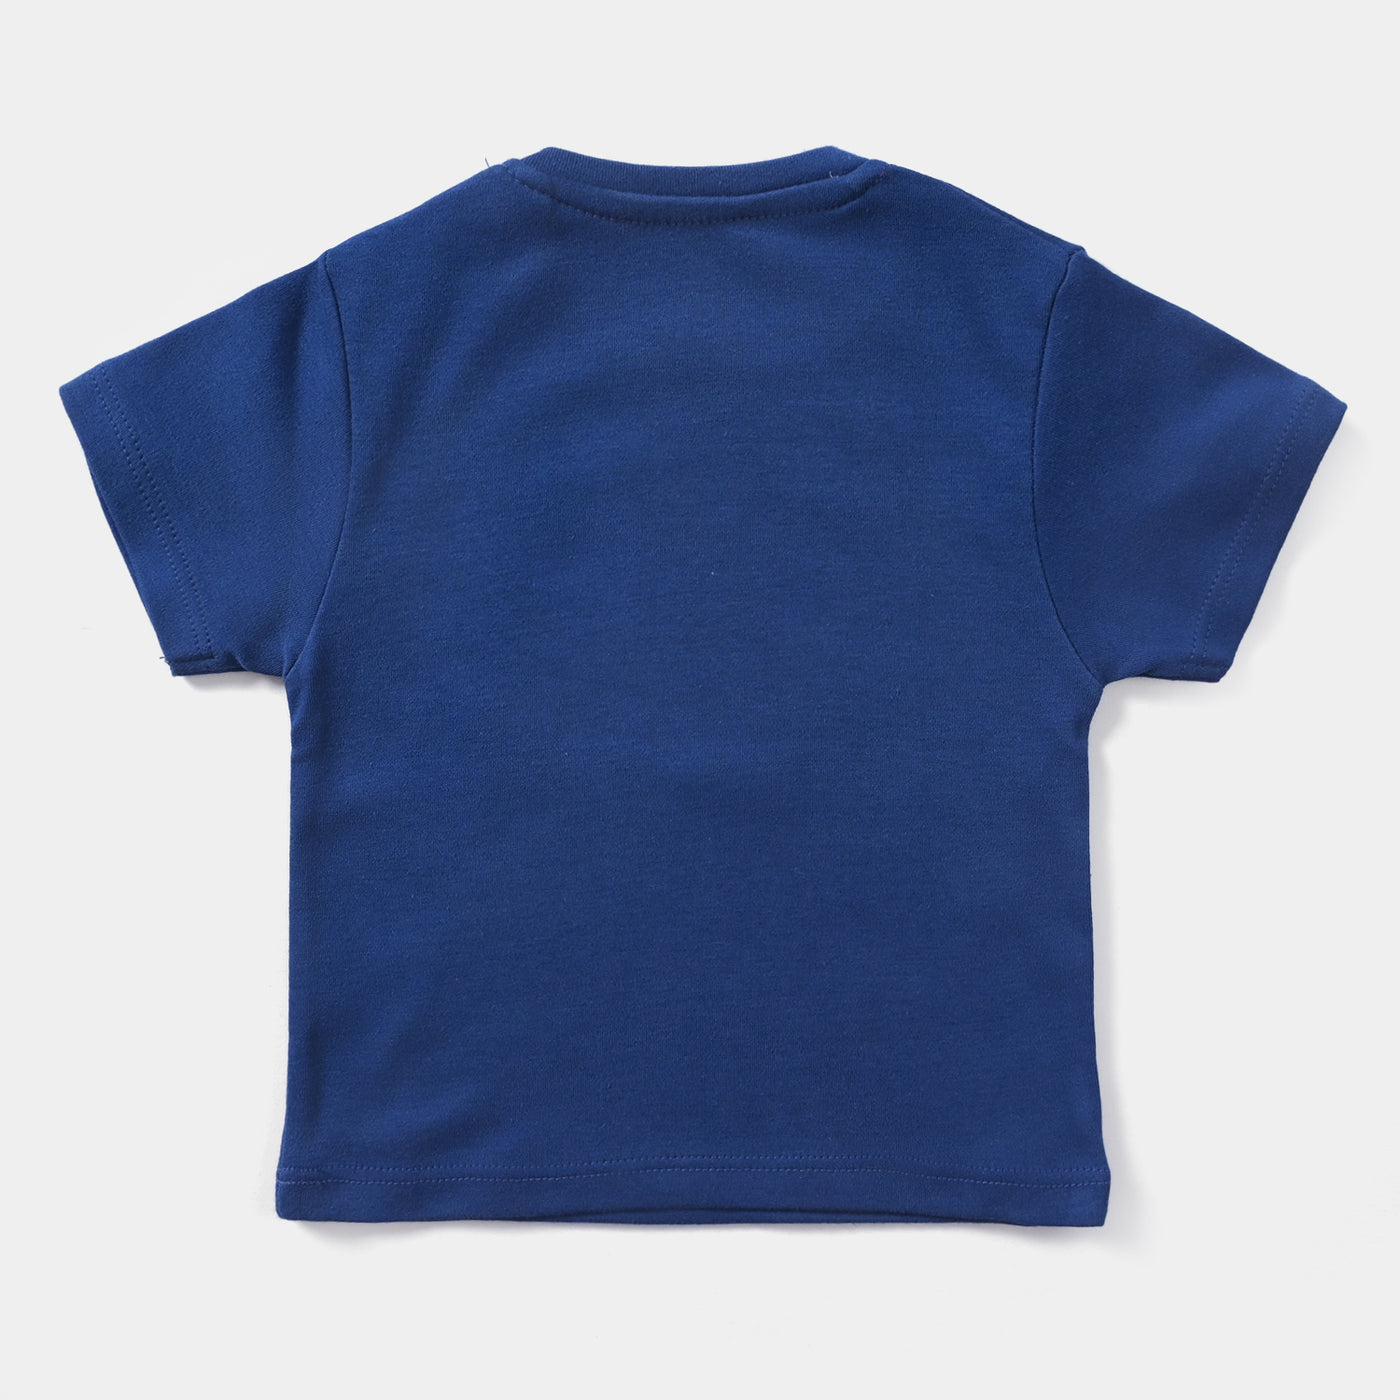 Infant Boys Cotton Interlock Knitted Suit Peanuts-B.Blue